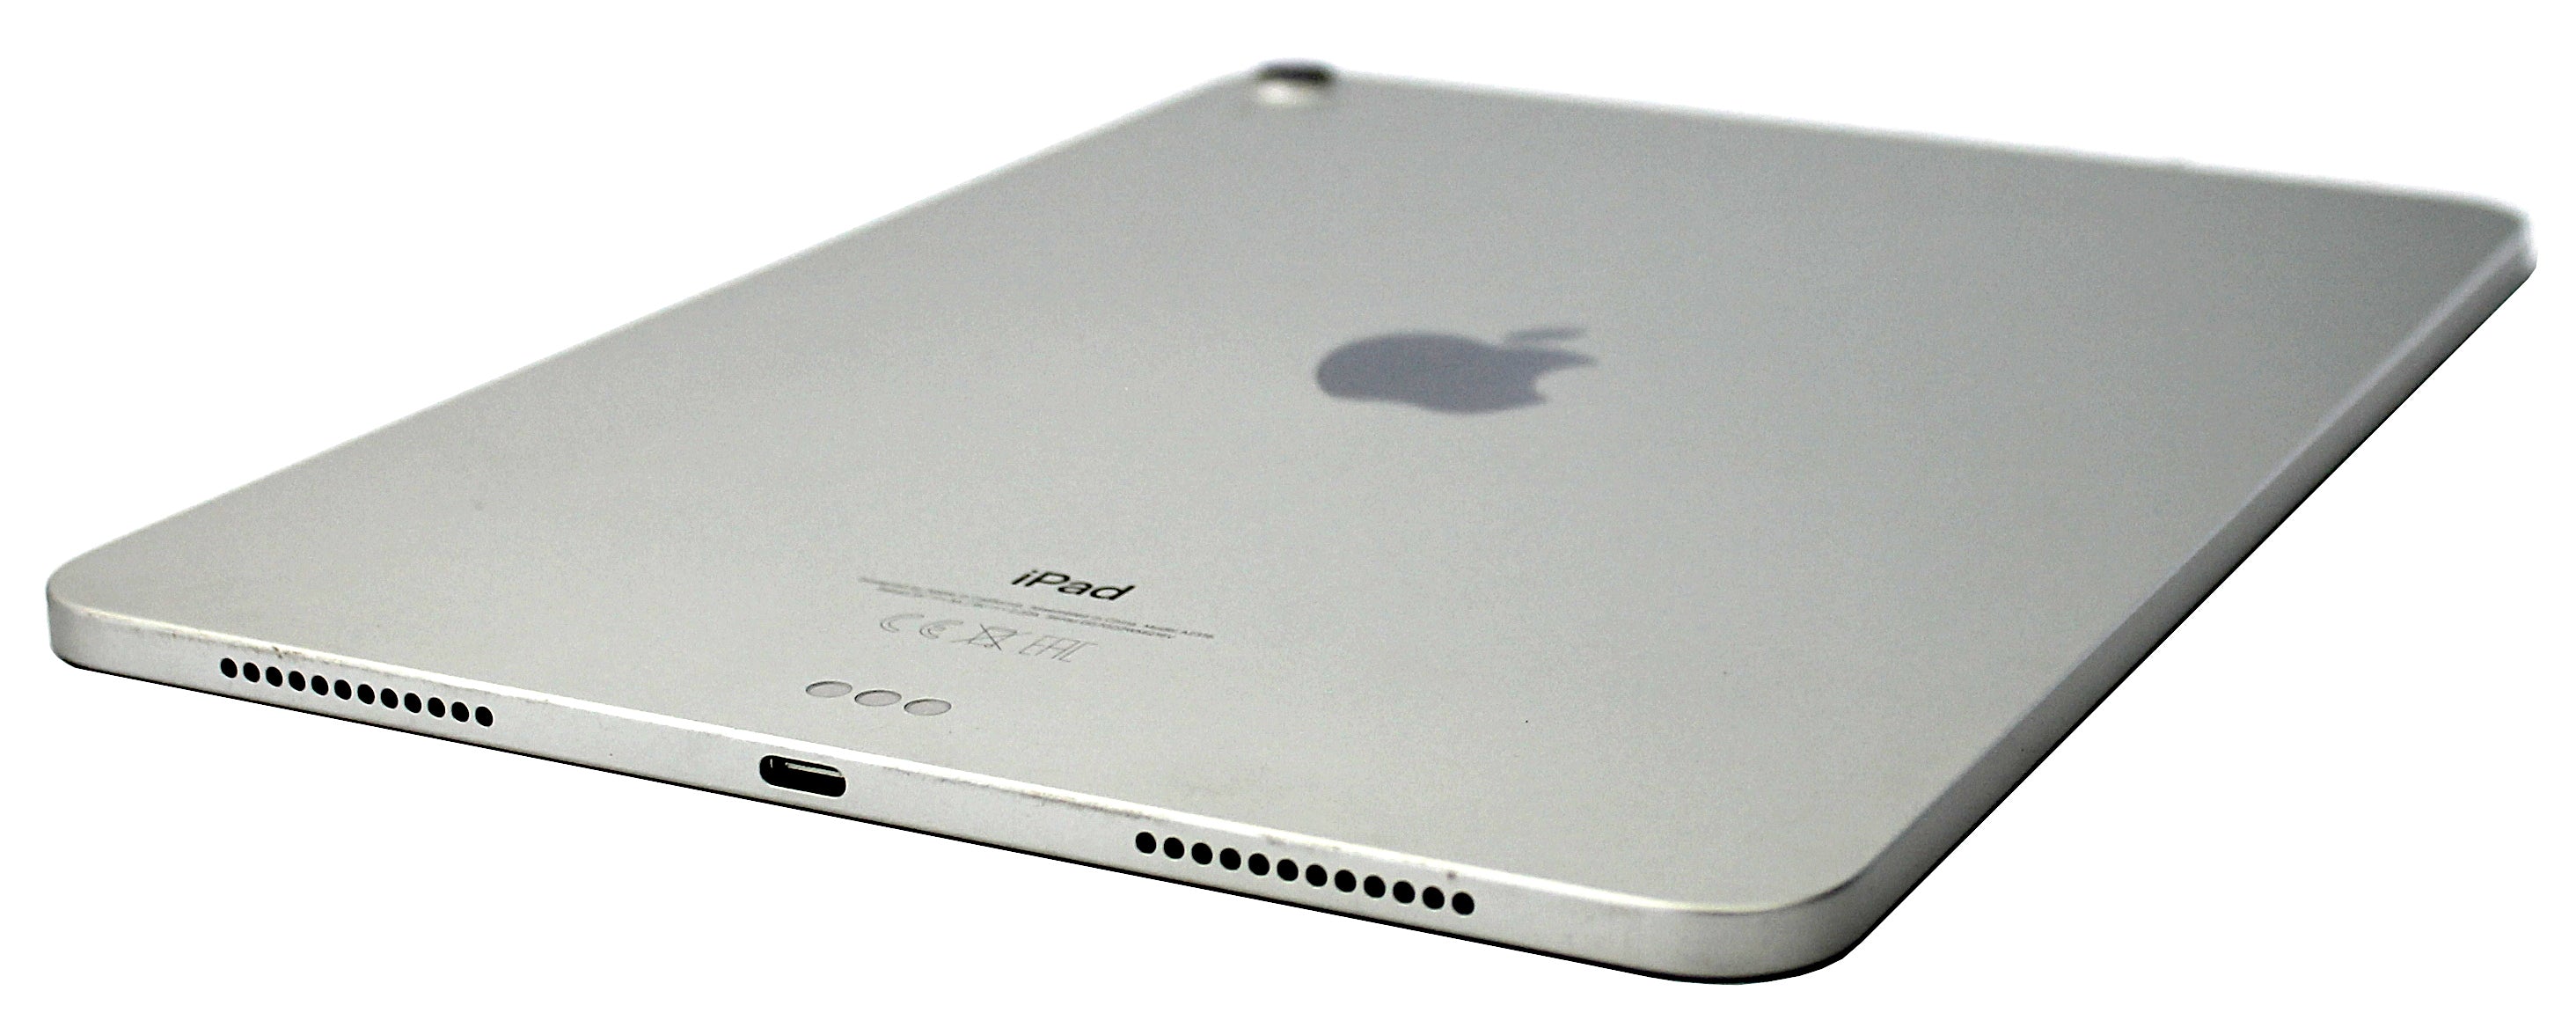 Apple iPad Air 4th Generation Tablet, 256GB, WiFi, Silver, A2316